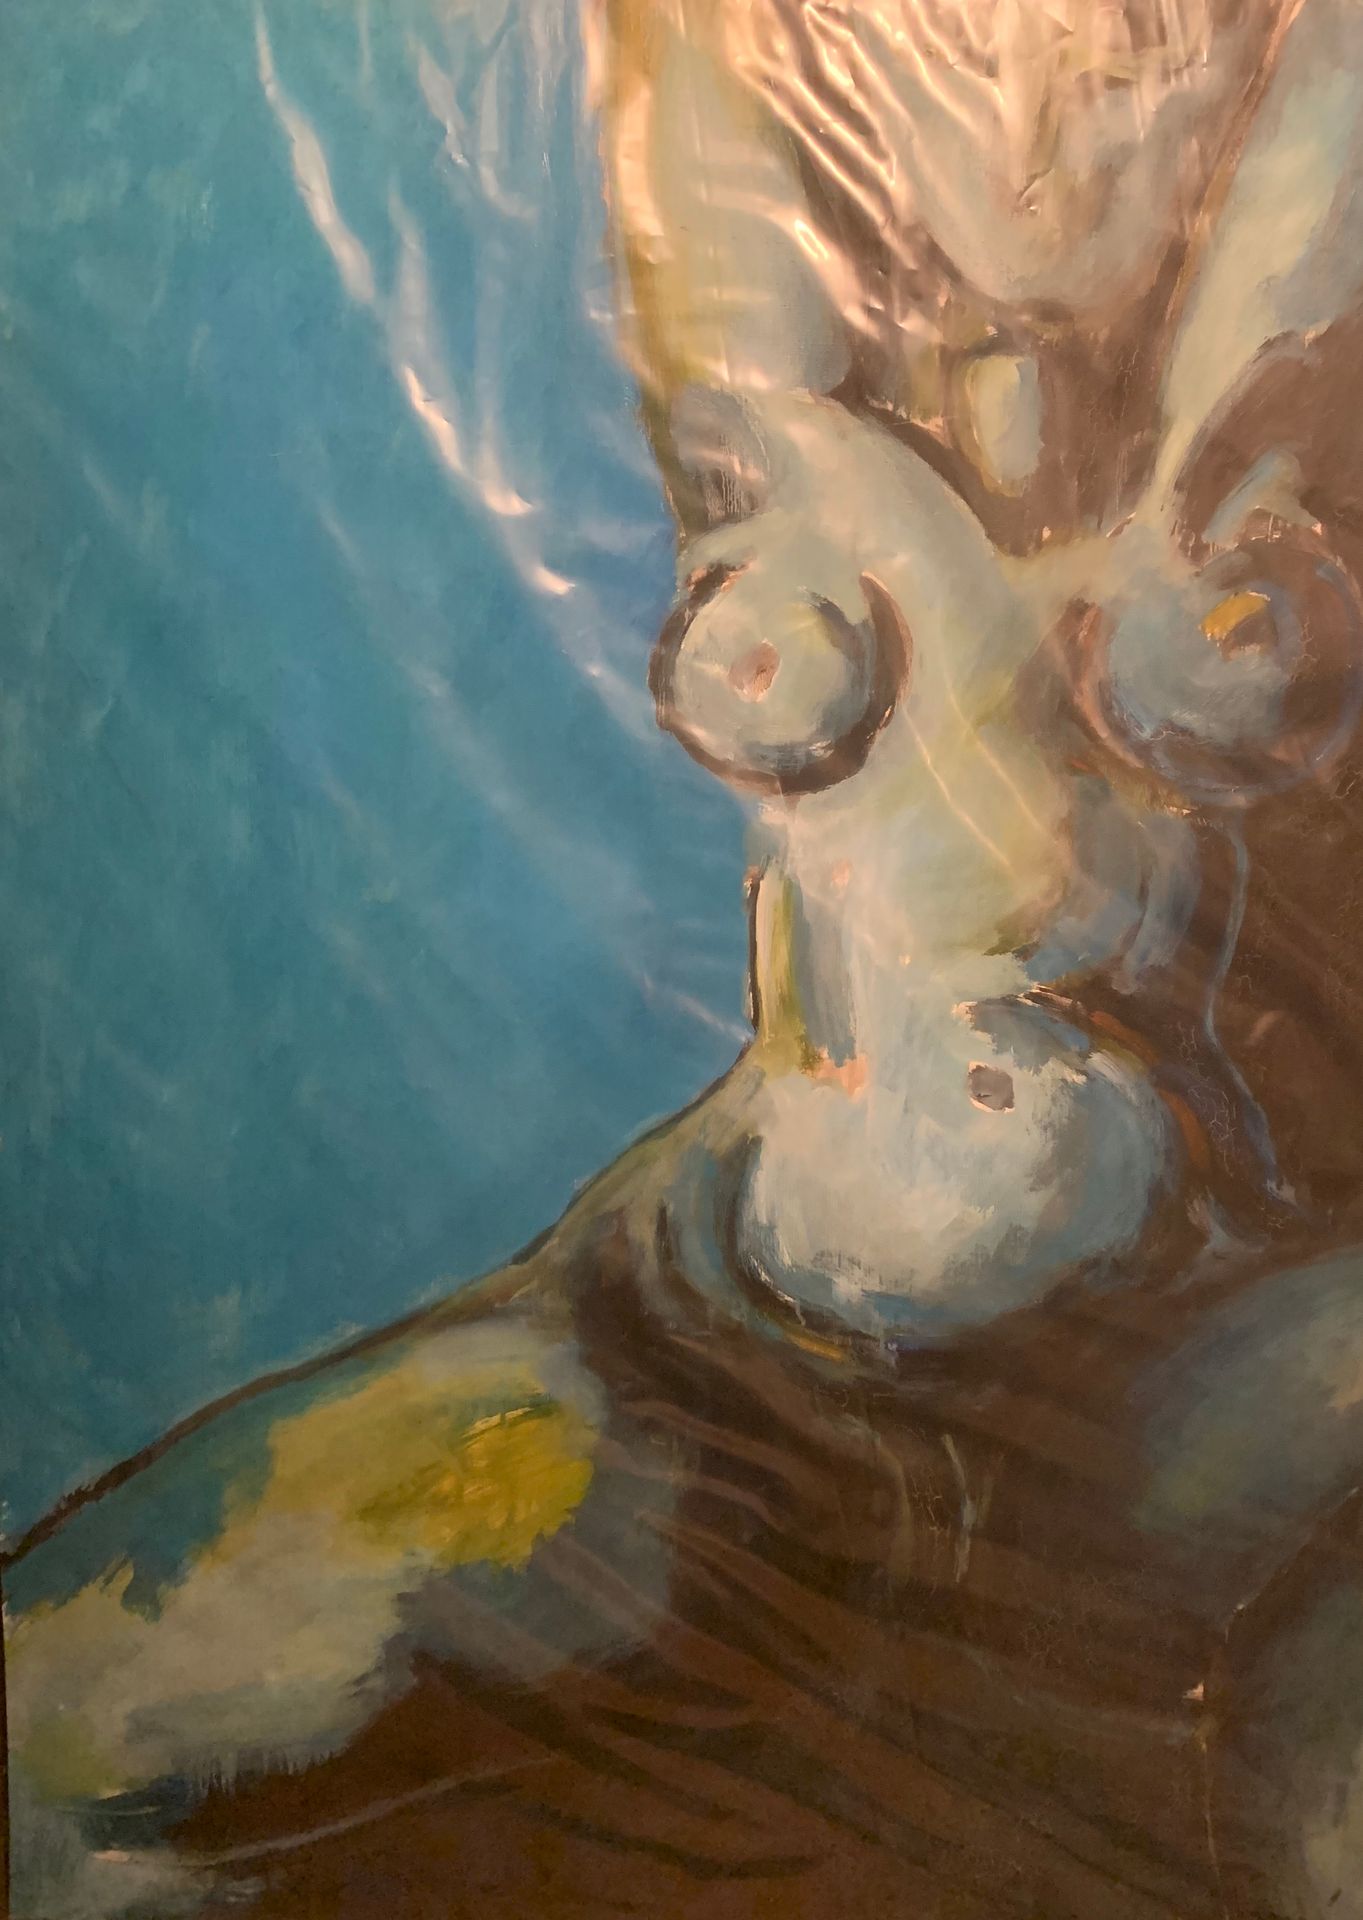 Null 安东尼奥-关斯(1926-2008)

蓝色裸体，1968年

布面油画，右下角有签名和日期

130 x 97 cm